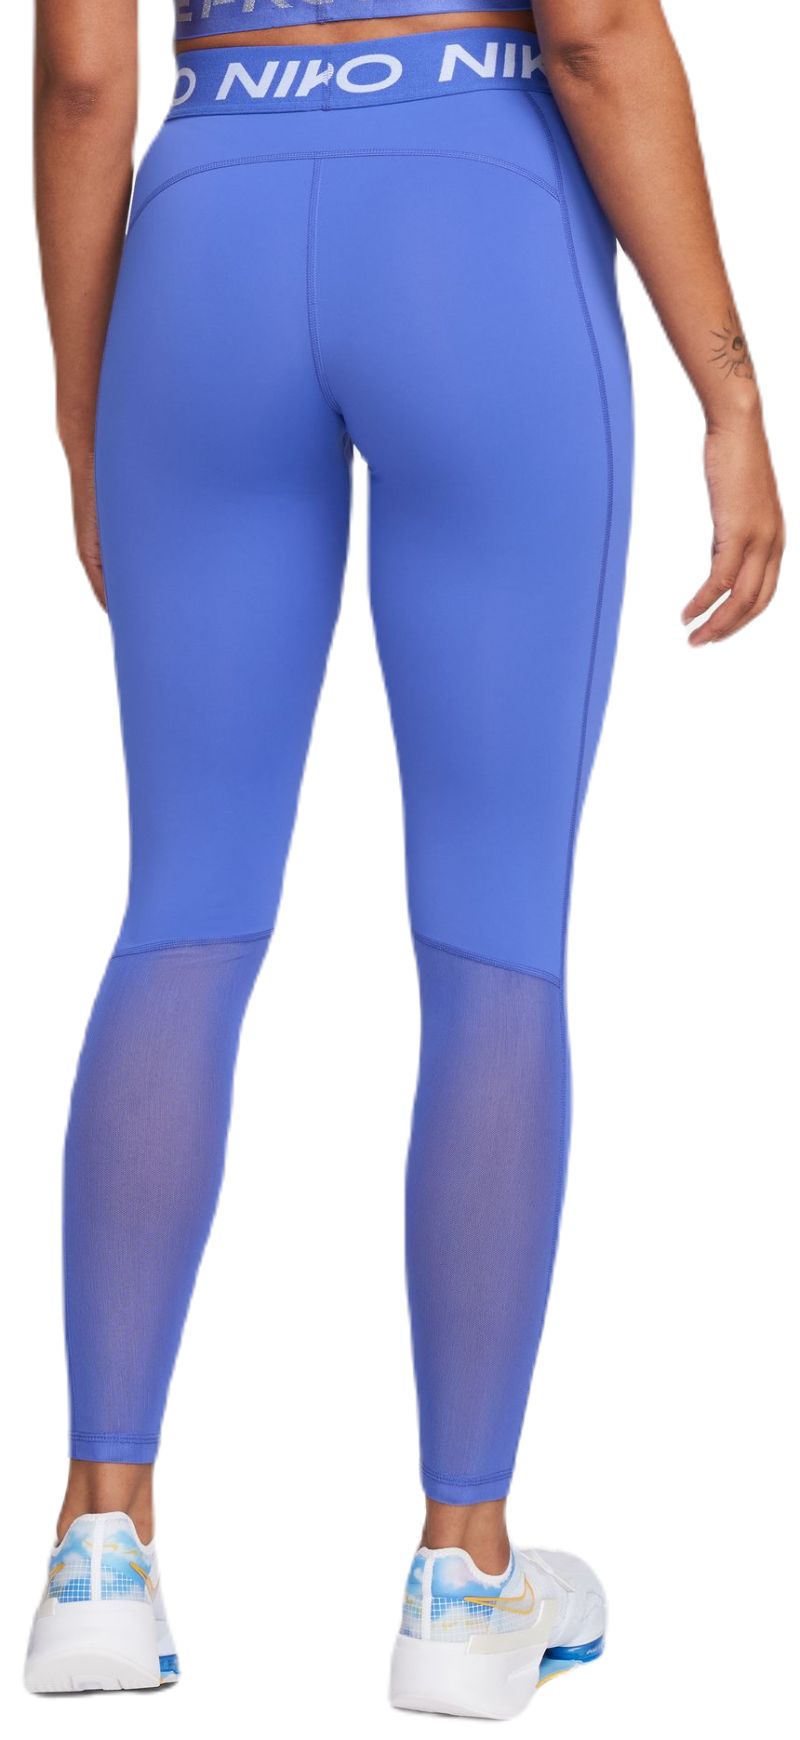 Nike Training Pro 365 leggings in blue